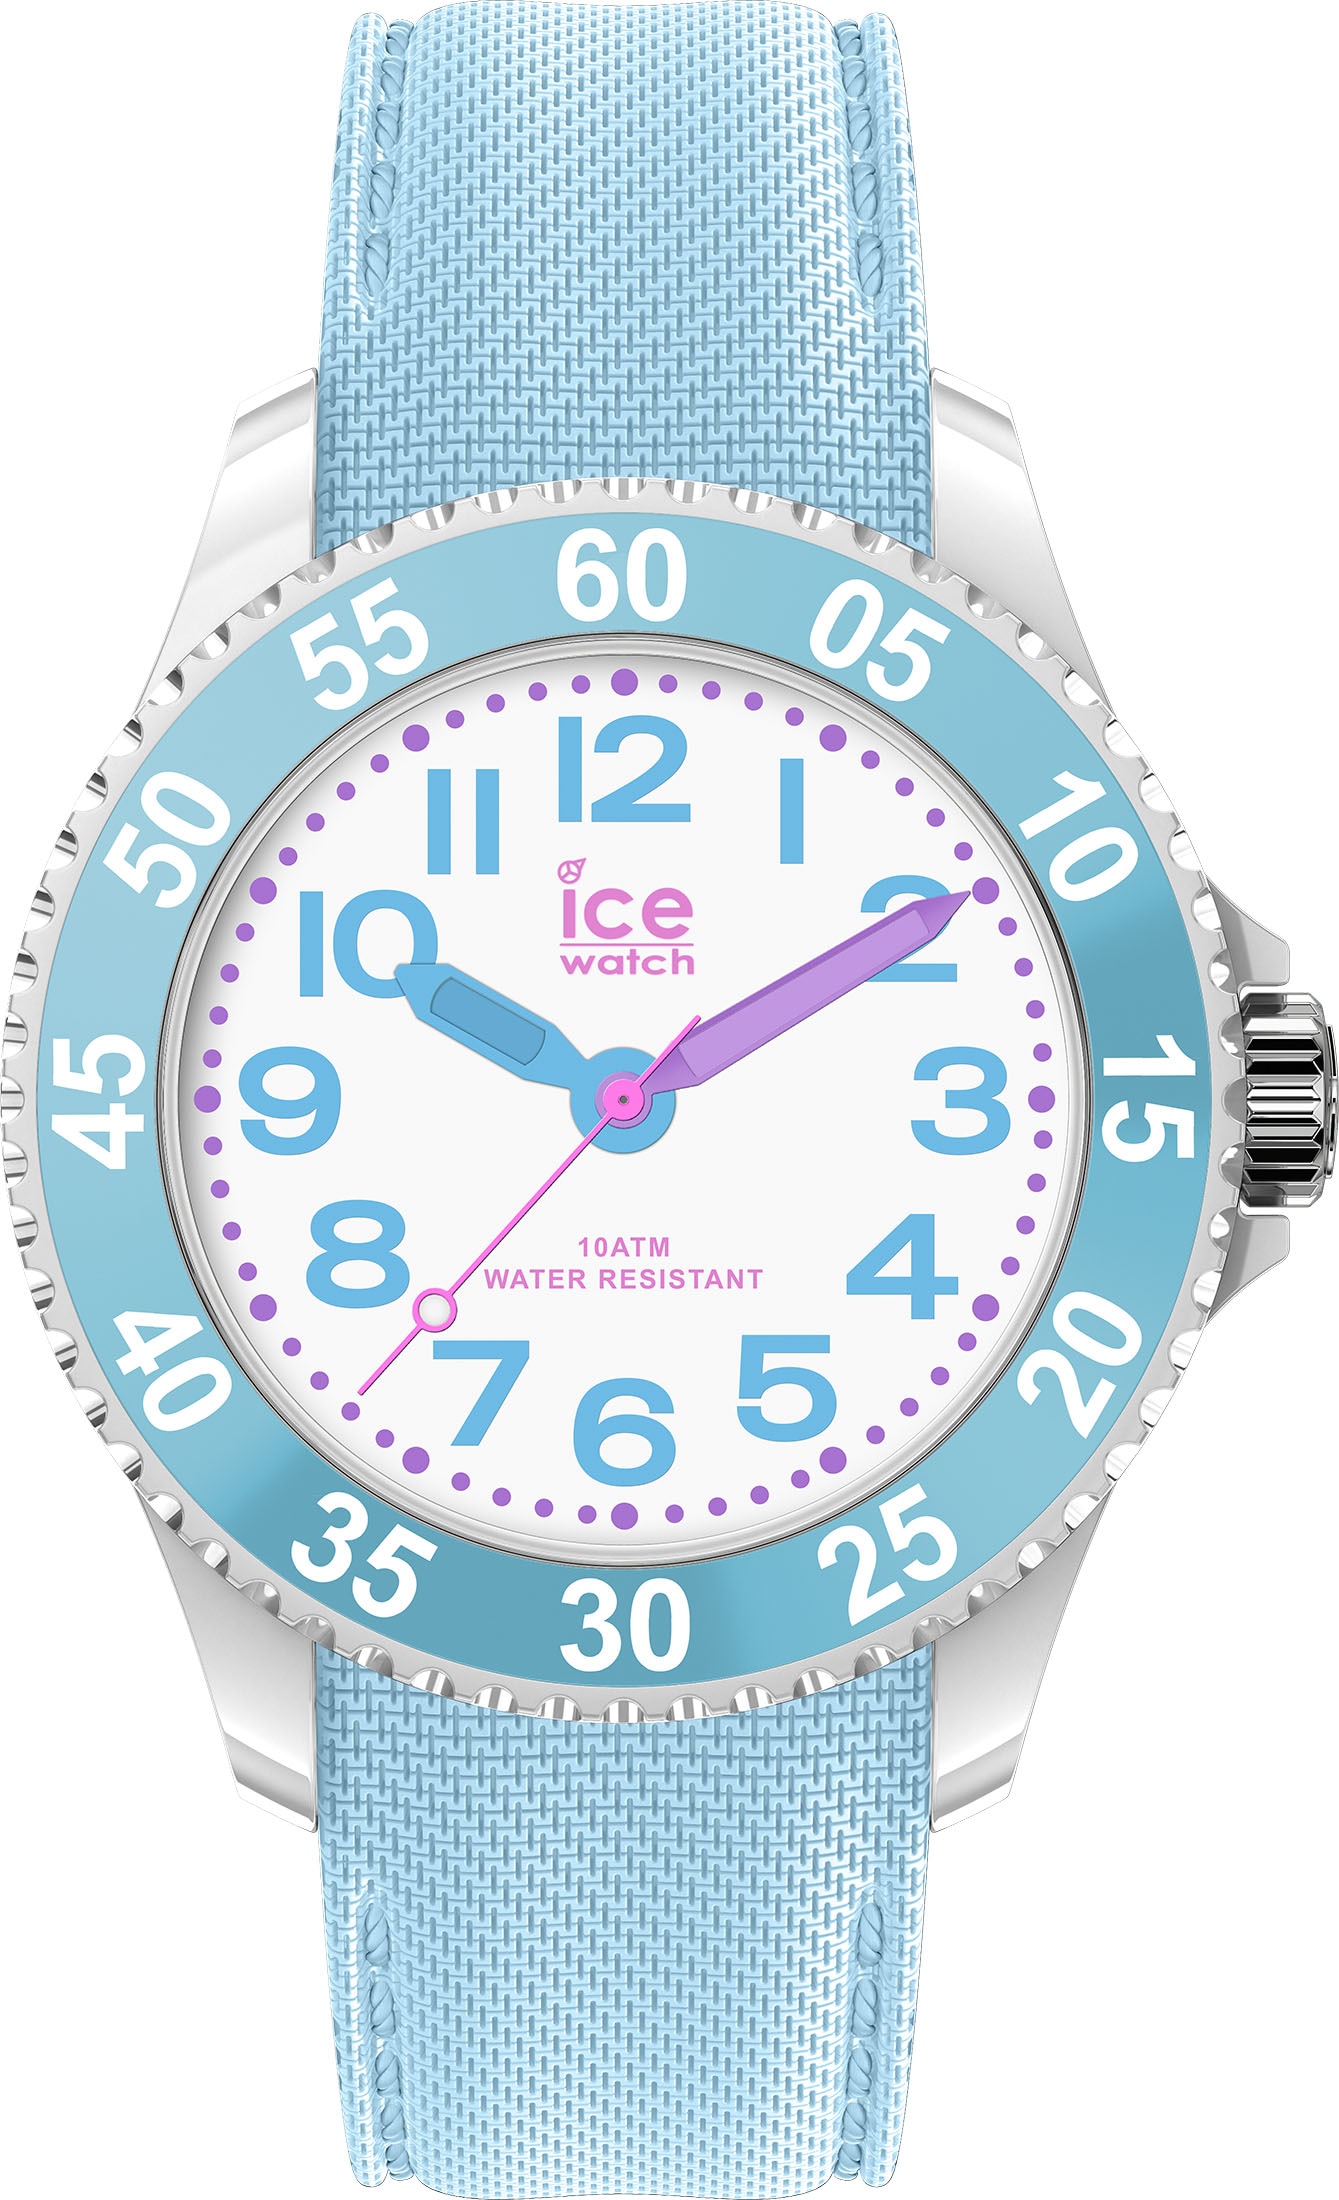 Blue Quarzuhr elephant, 018936«, bei XS ideal - »ICE cartoon ice-watch Geschenk als auch ♕